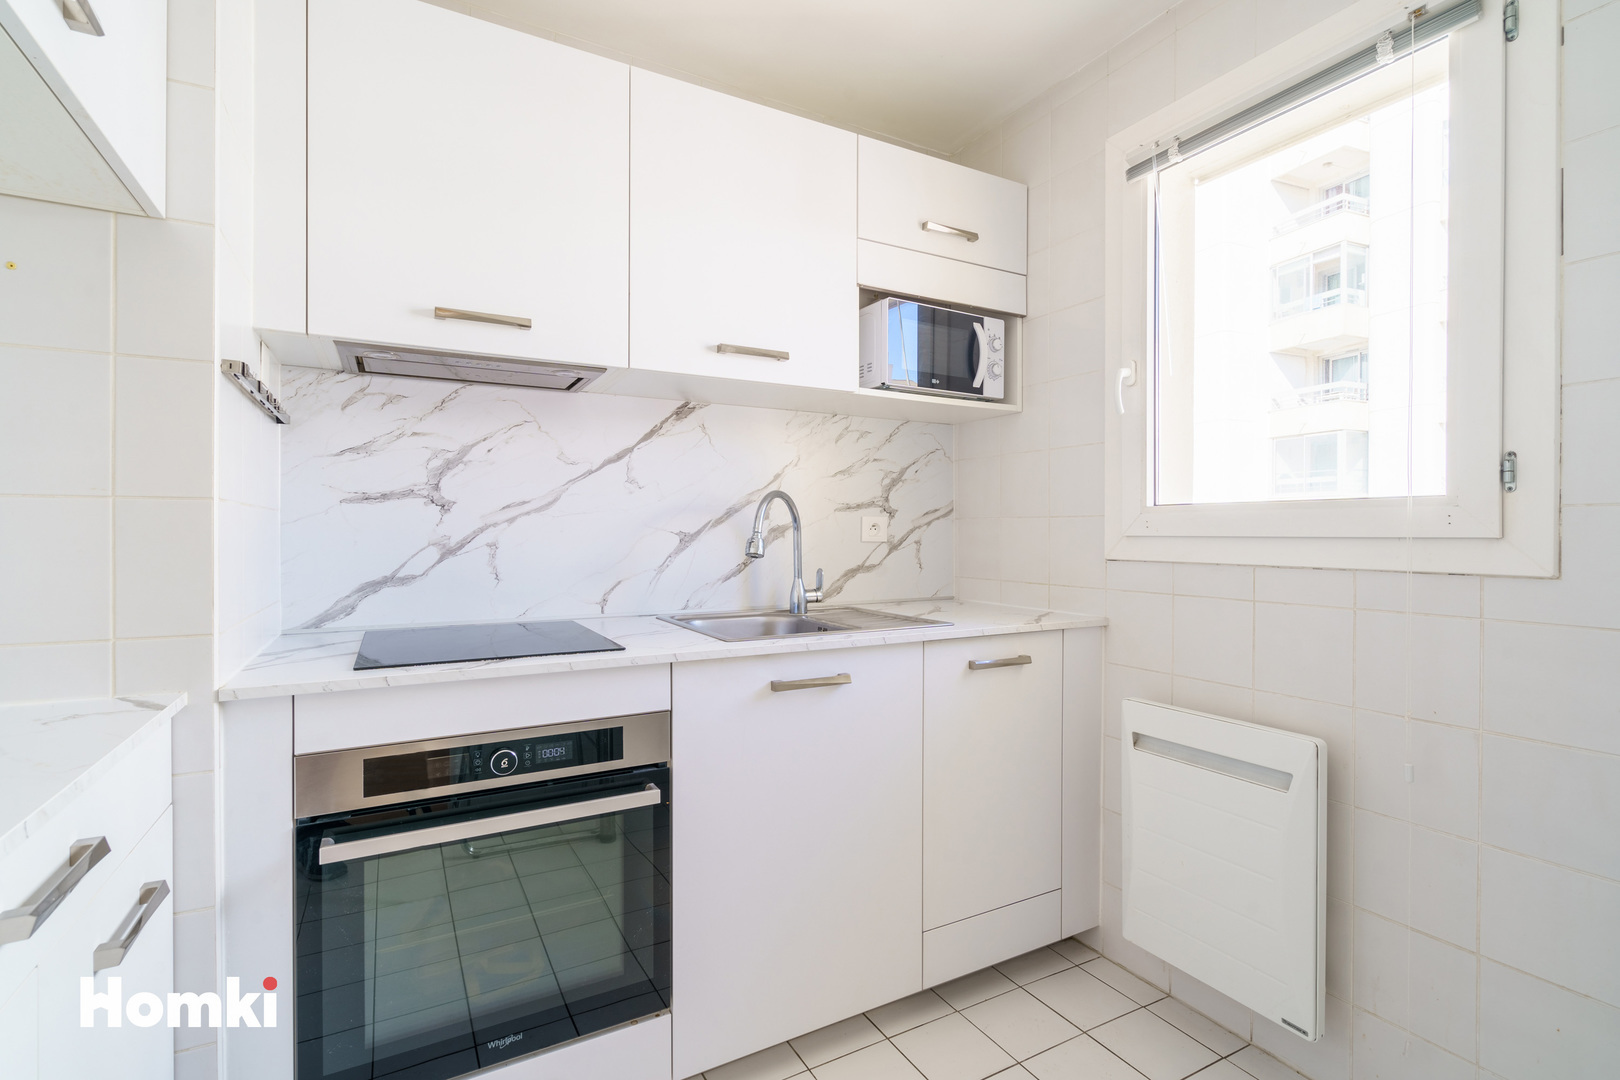 Homki - Vente Appartement  de 39.0 m² à Biarritz 64200